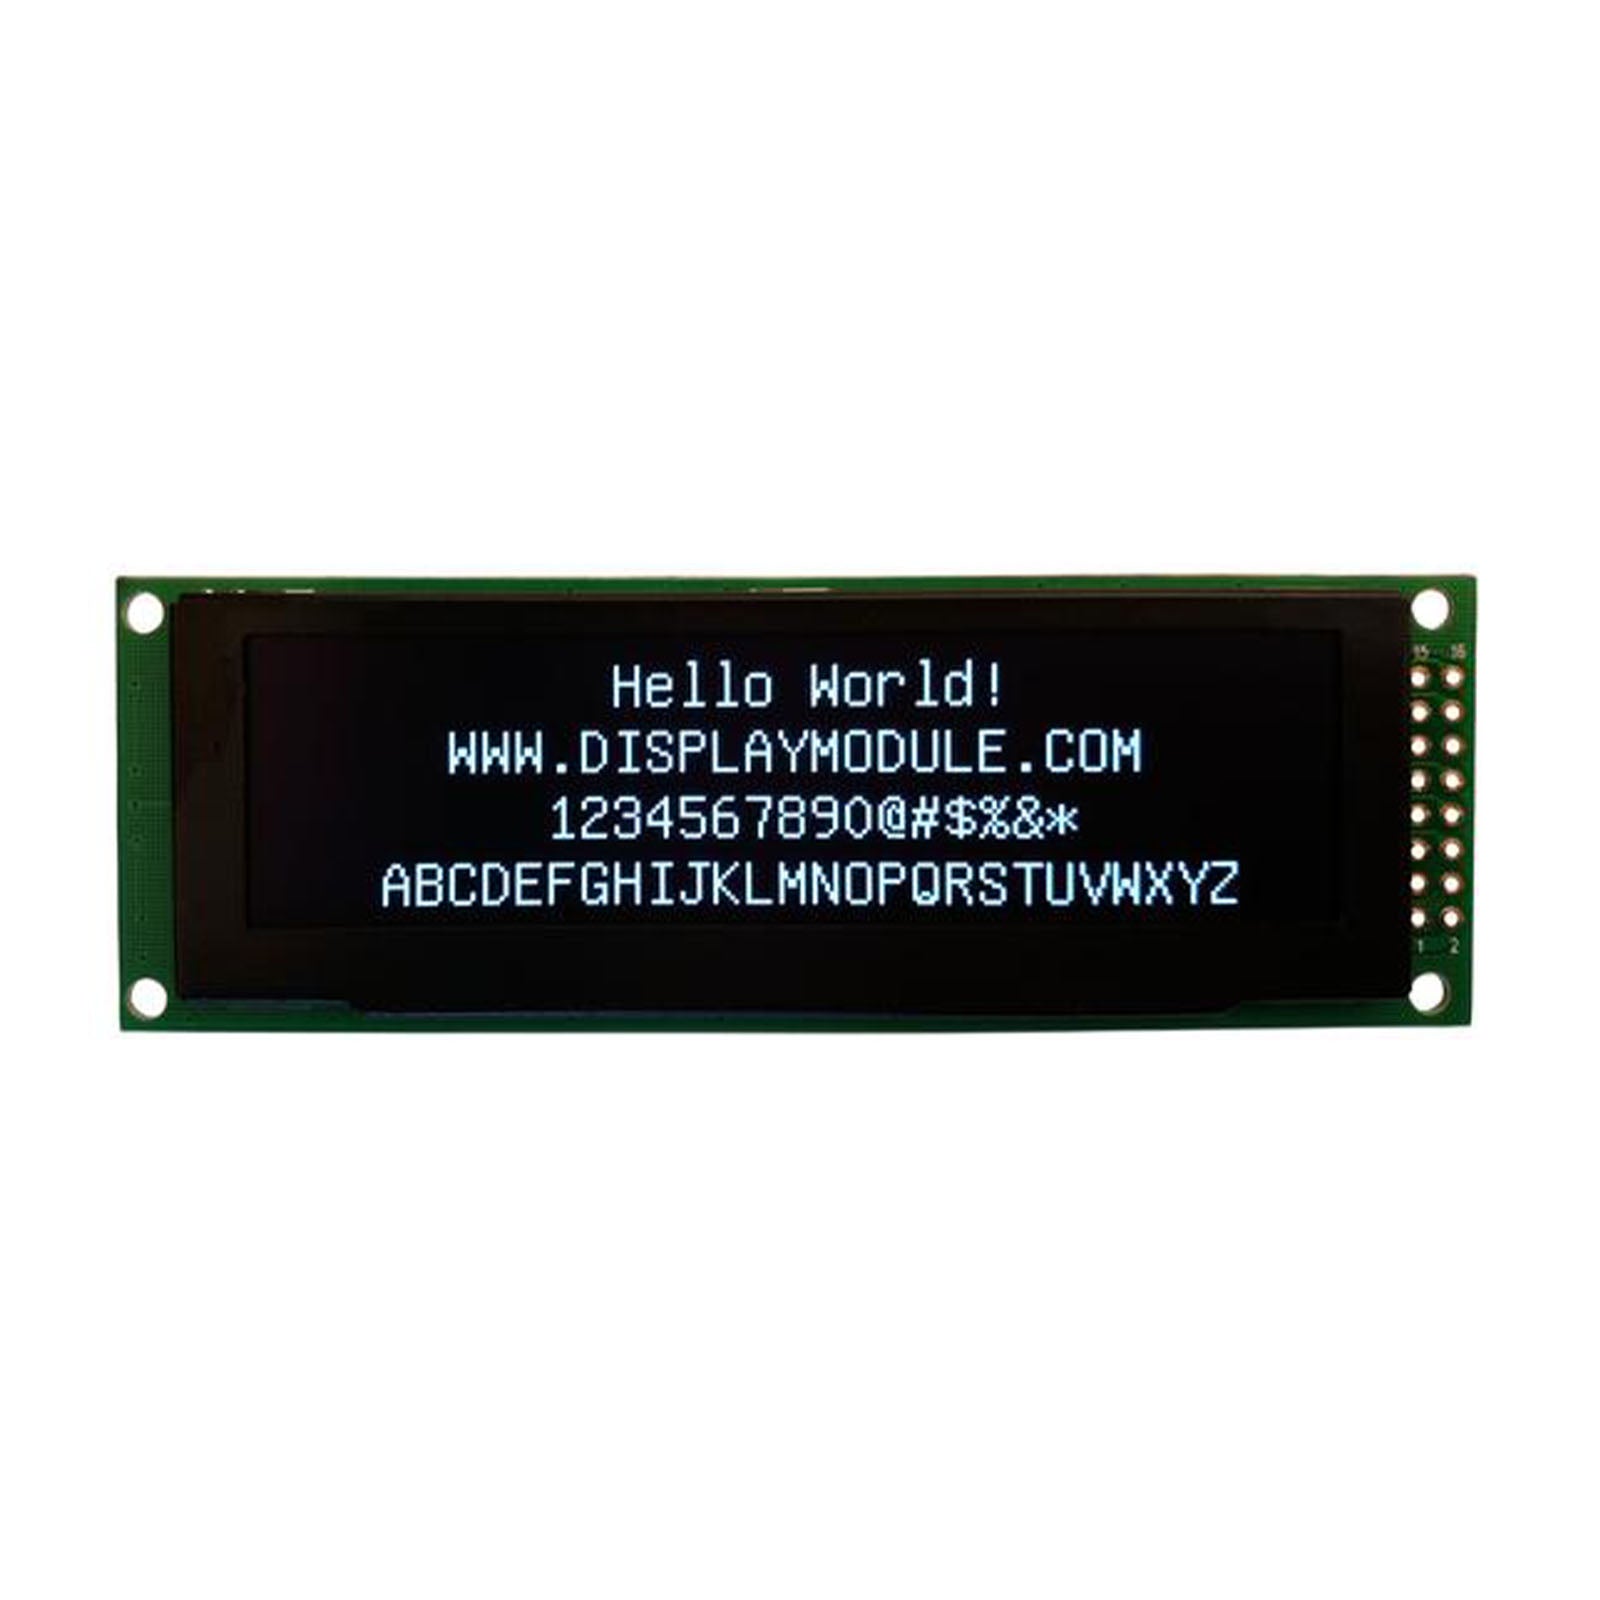 DisplayModule 3.2" 256x64 Monochrome Graphic OLED Display Module - MCU, SPI